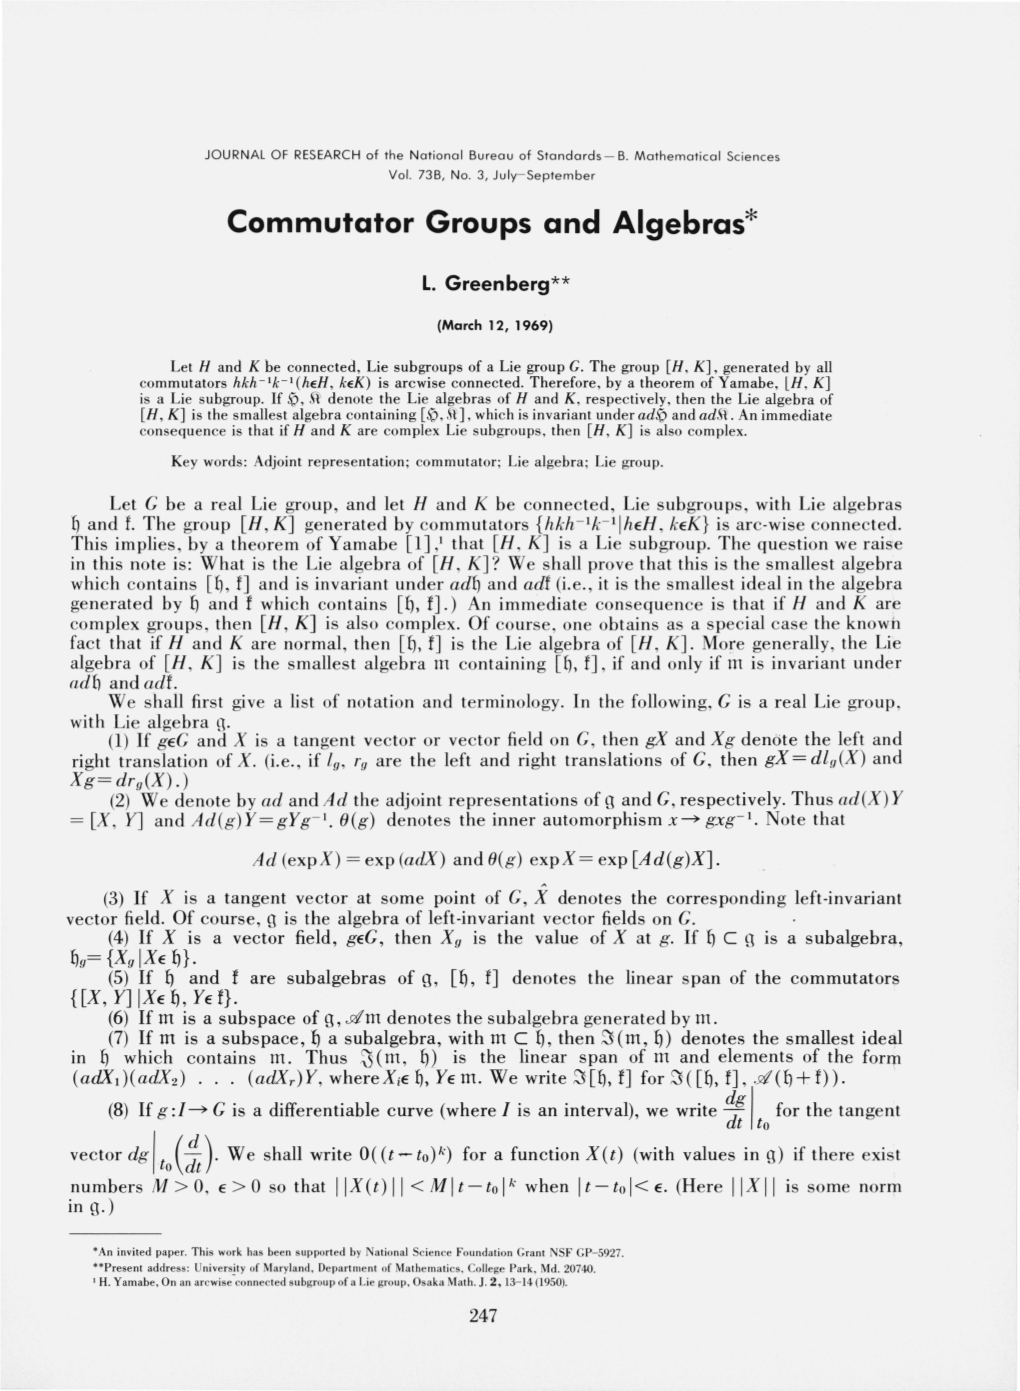 Commutator Groups and Algebras